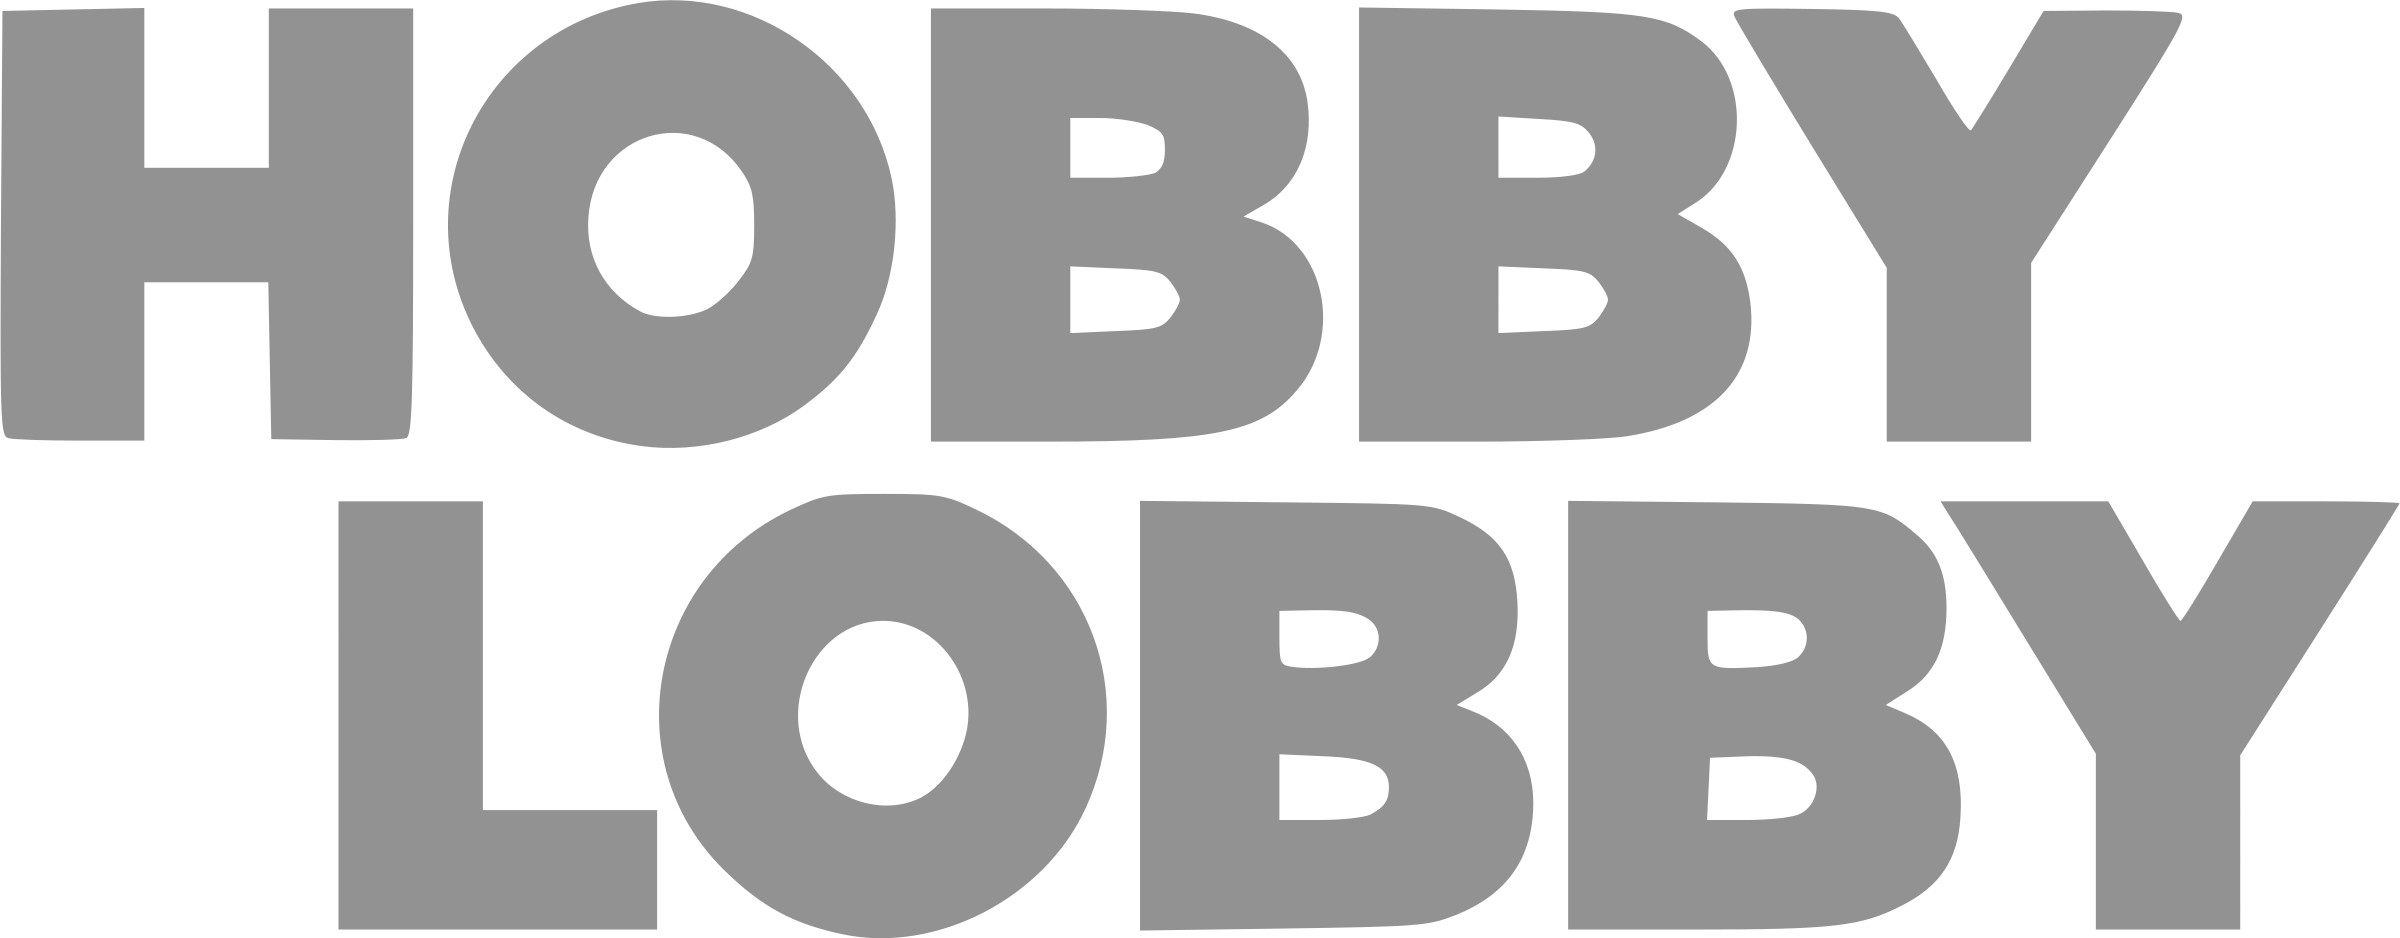 hobby-lobby_BW.png